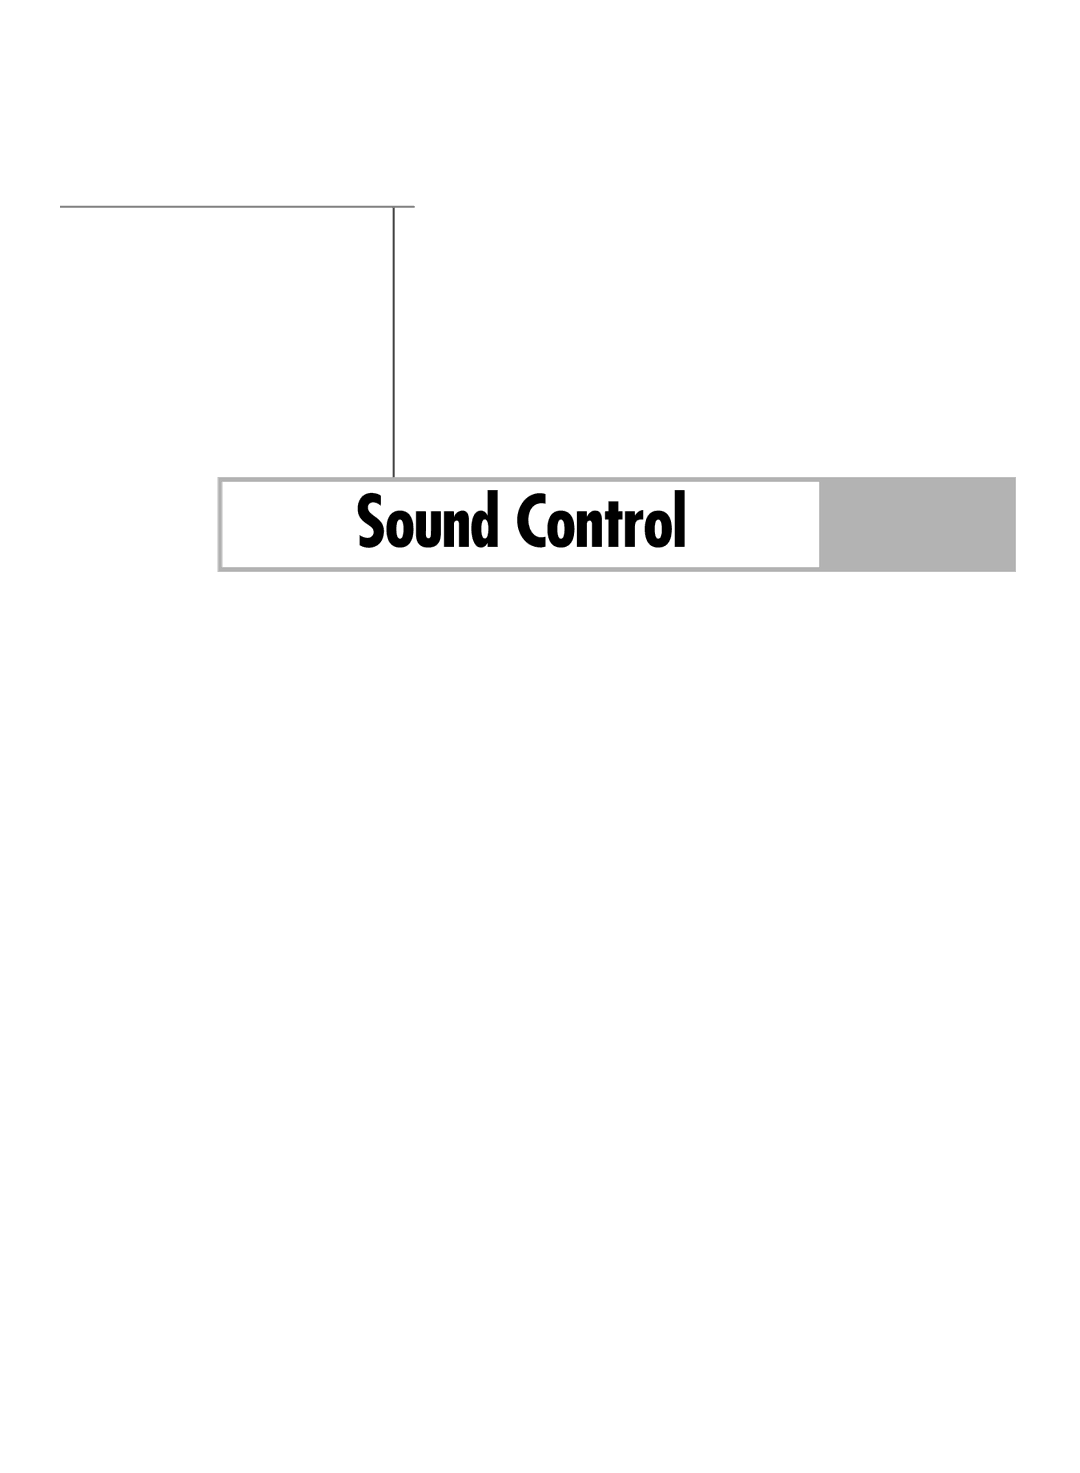 Samsung HL-S4676S manual Sound Control 